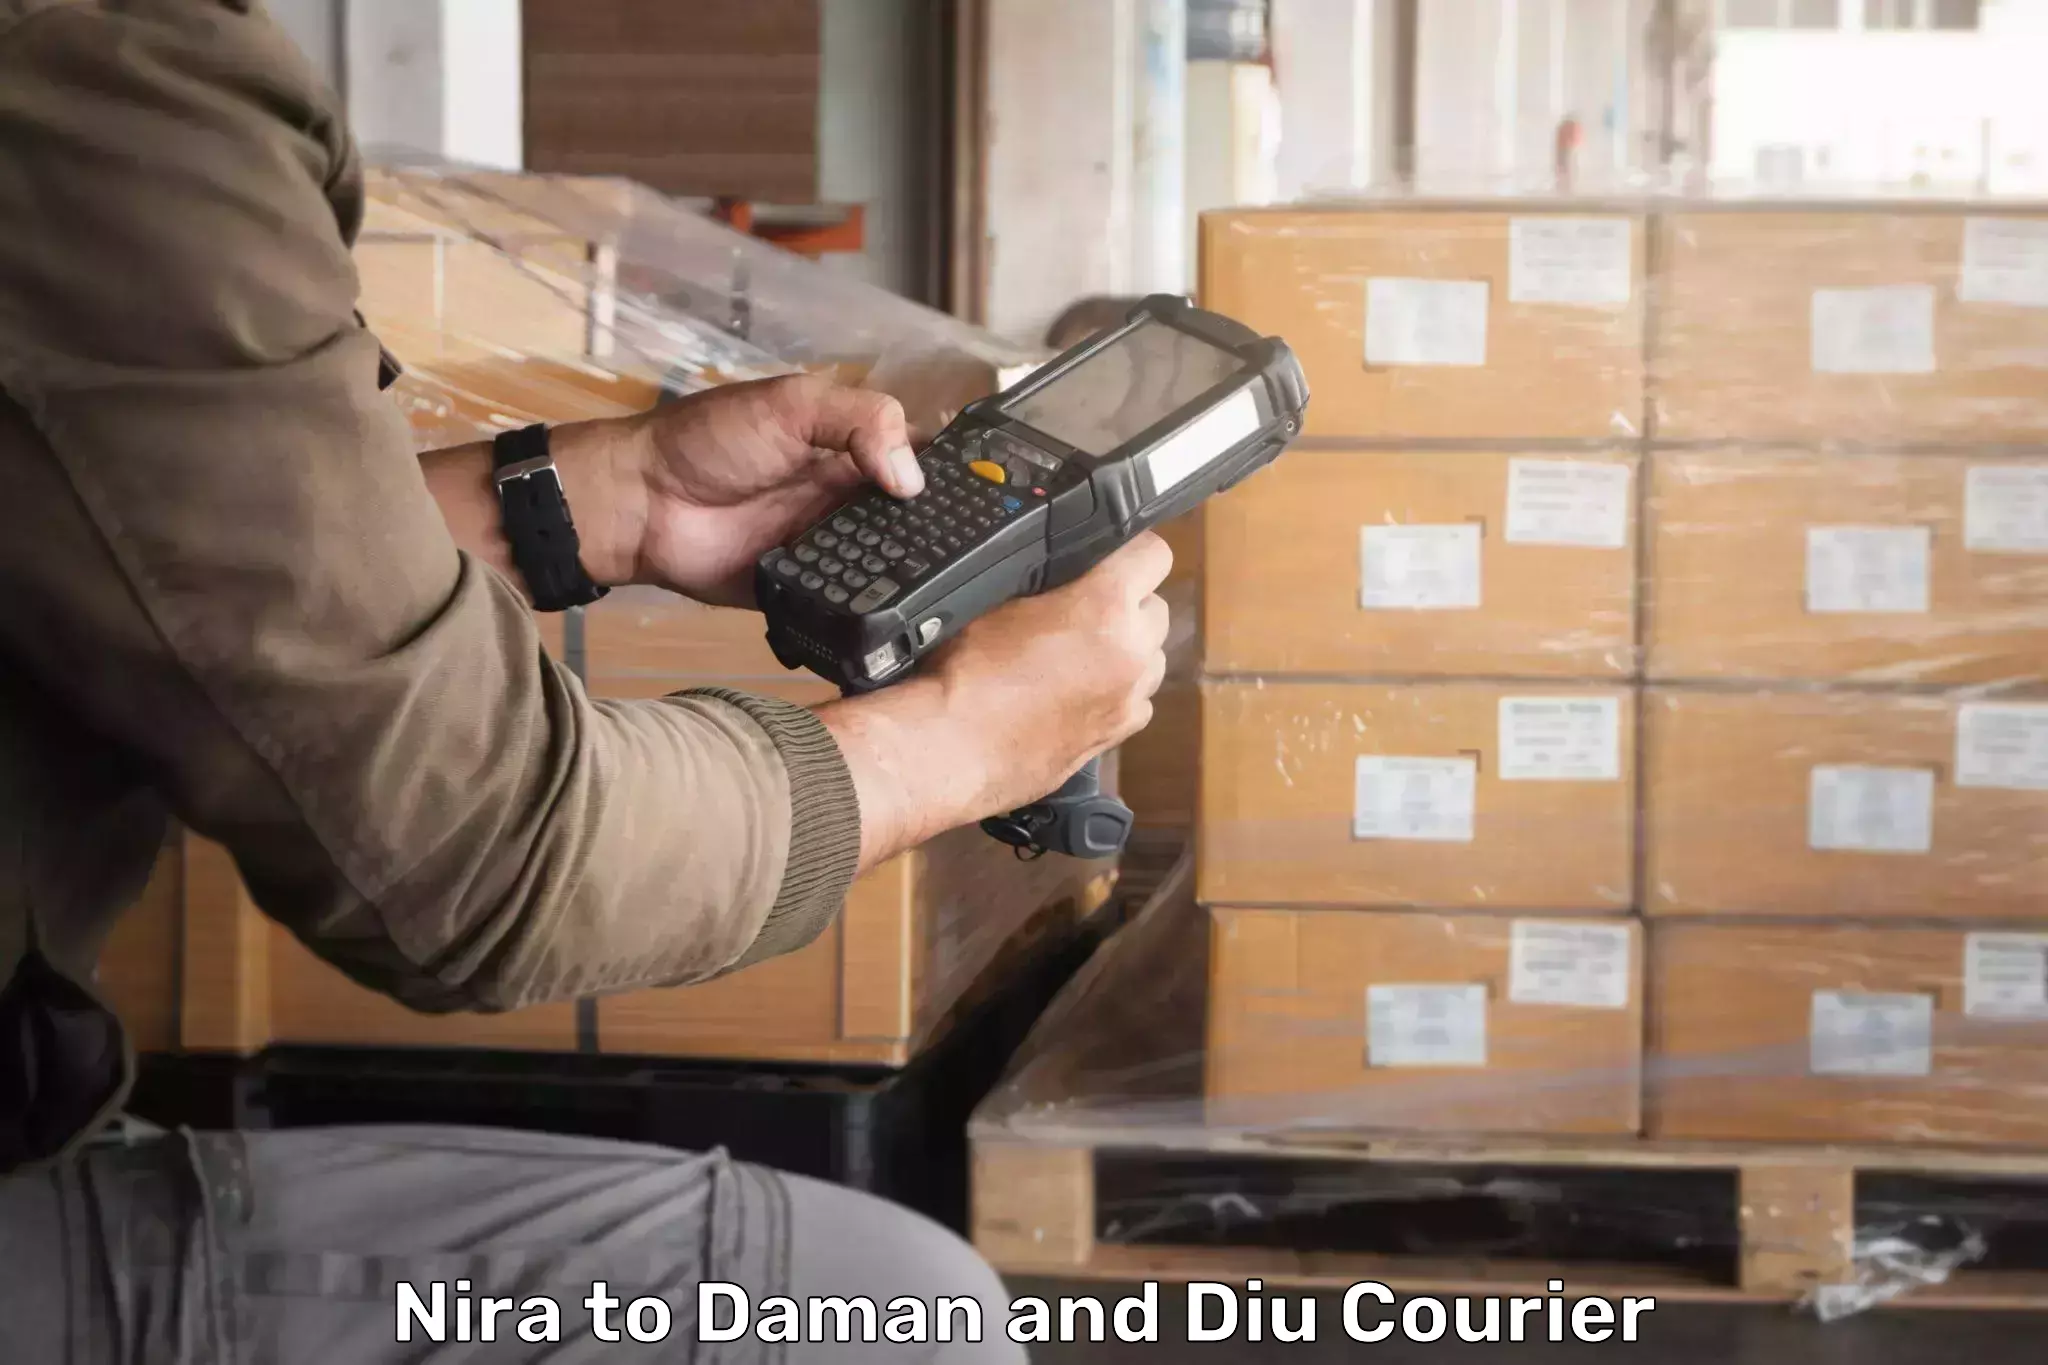 24-hour courier service Nira to Daman and Diu